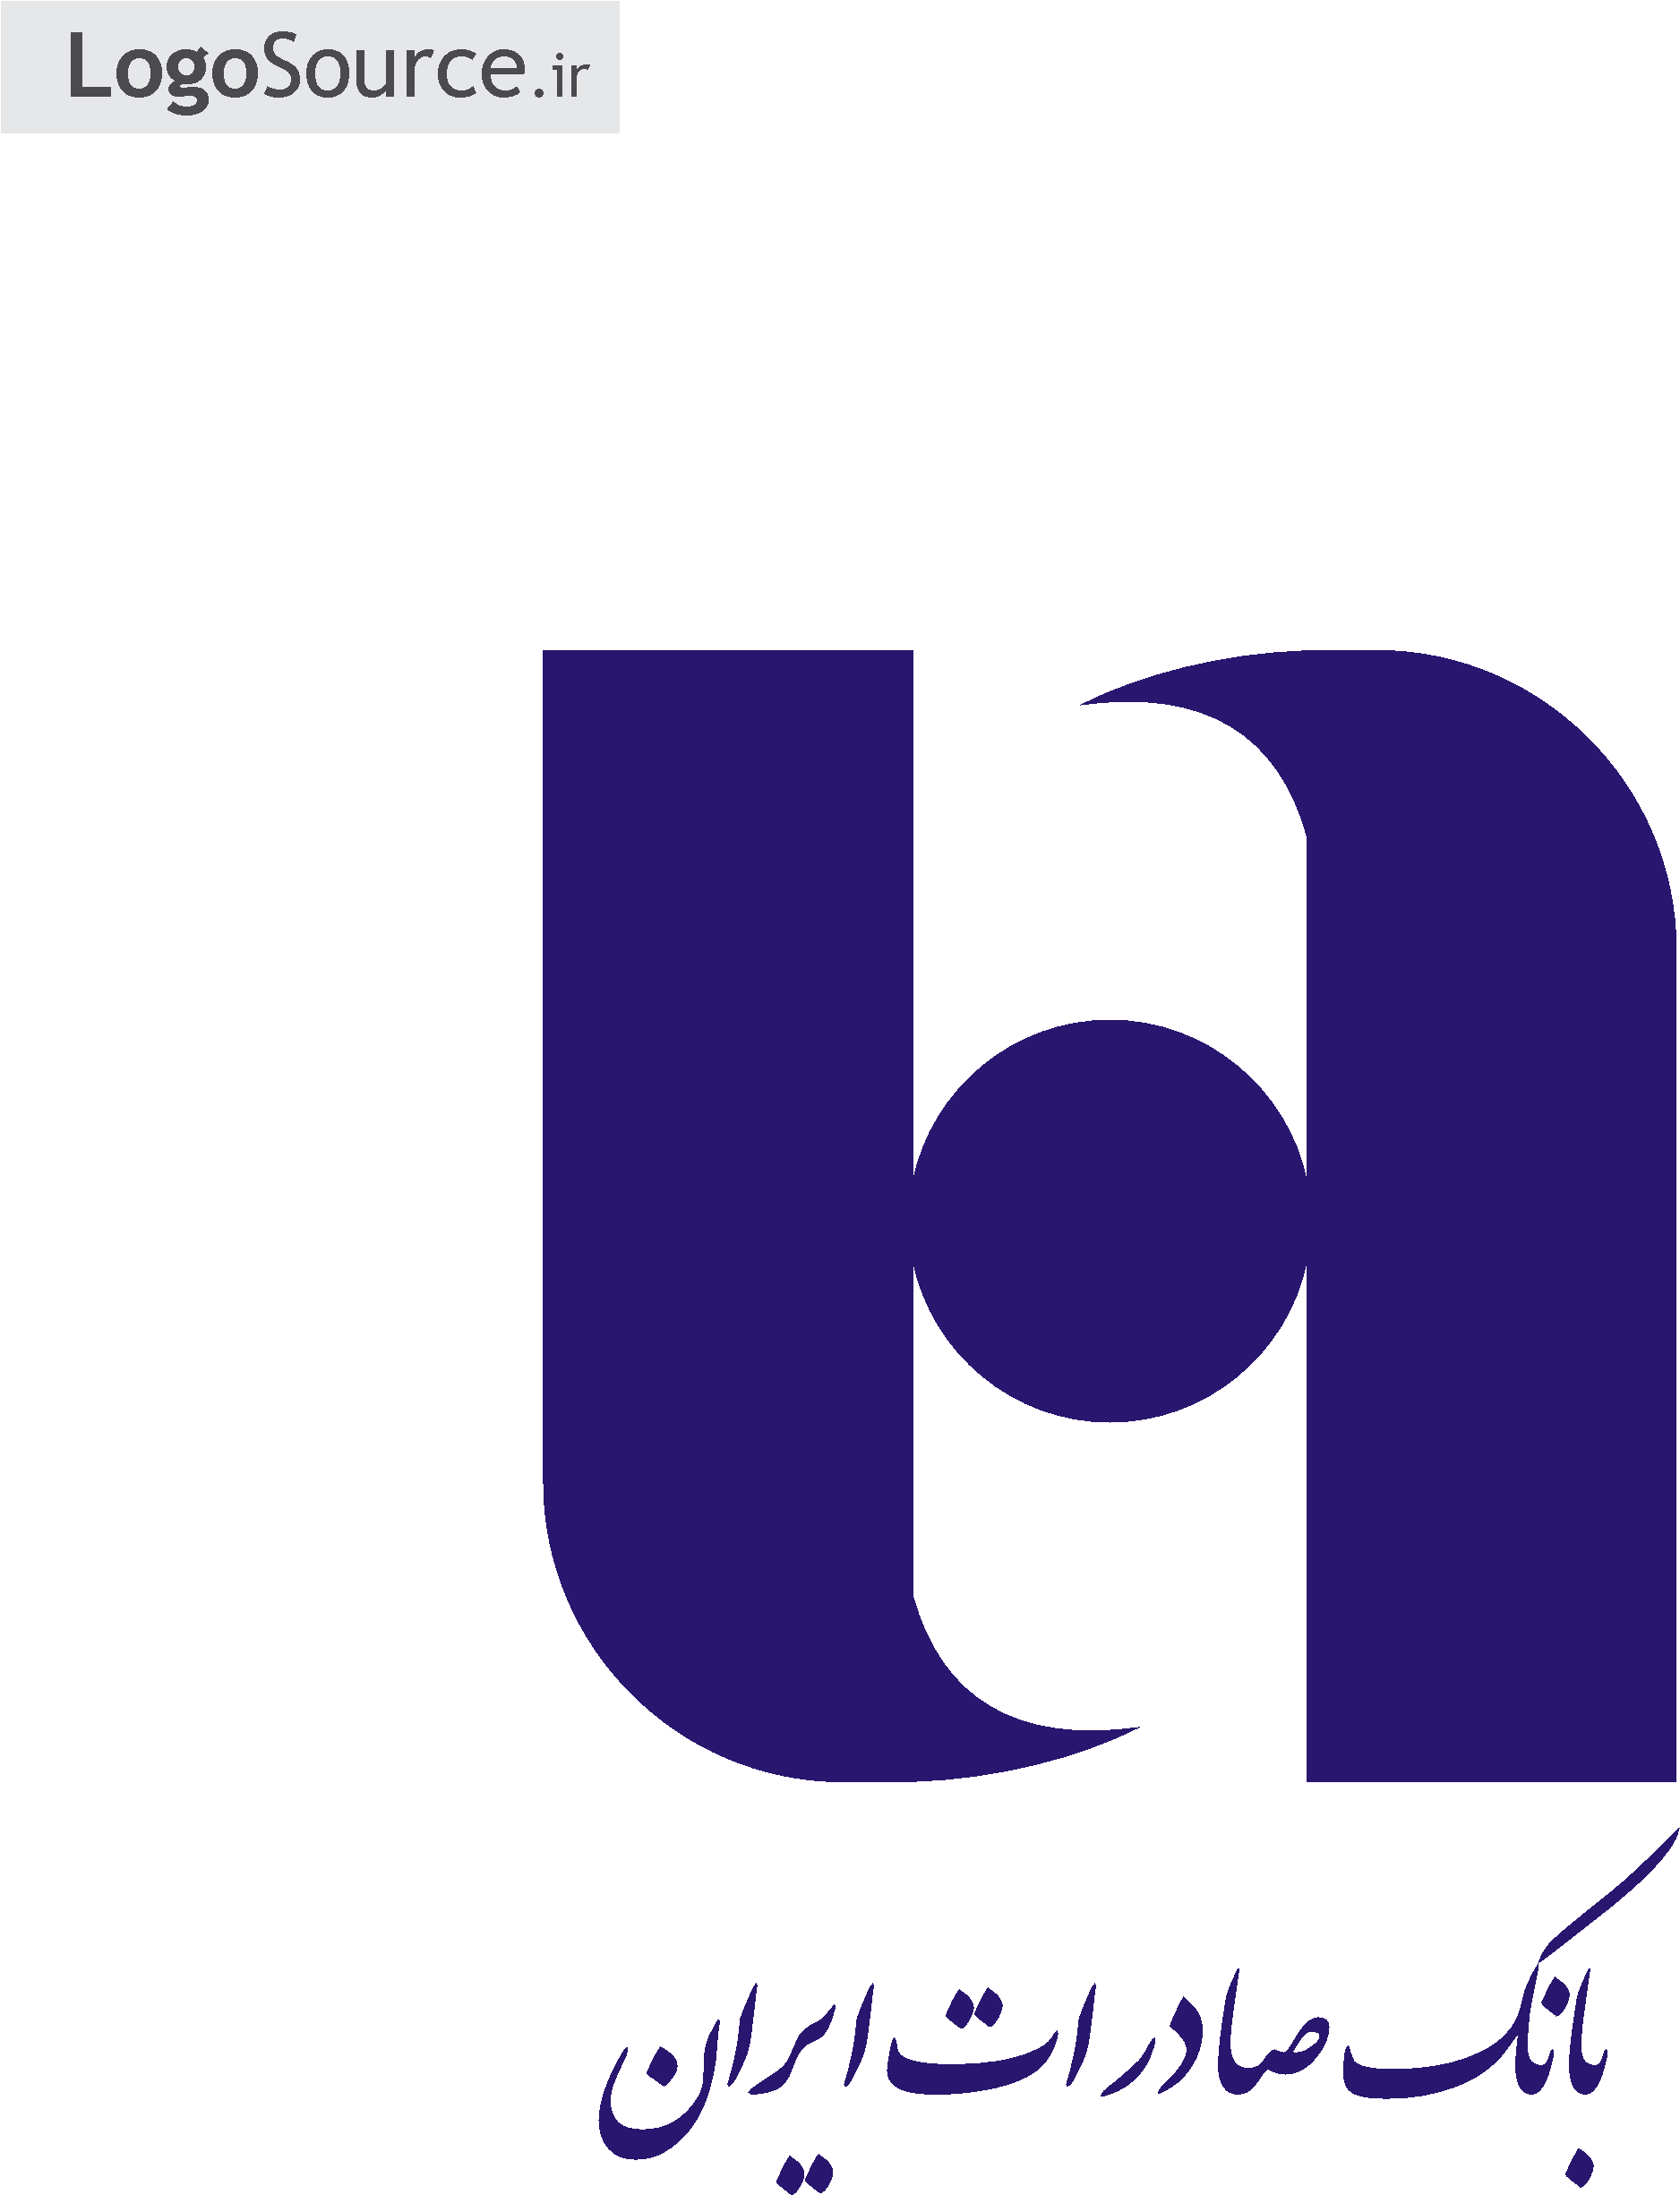 File Png - Bank Saderat Iran Logo (2480x3507)